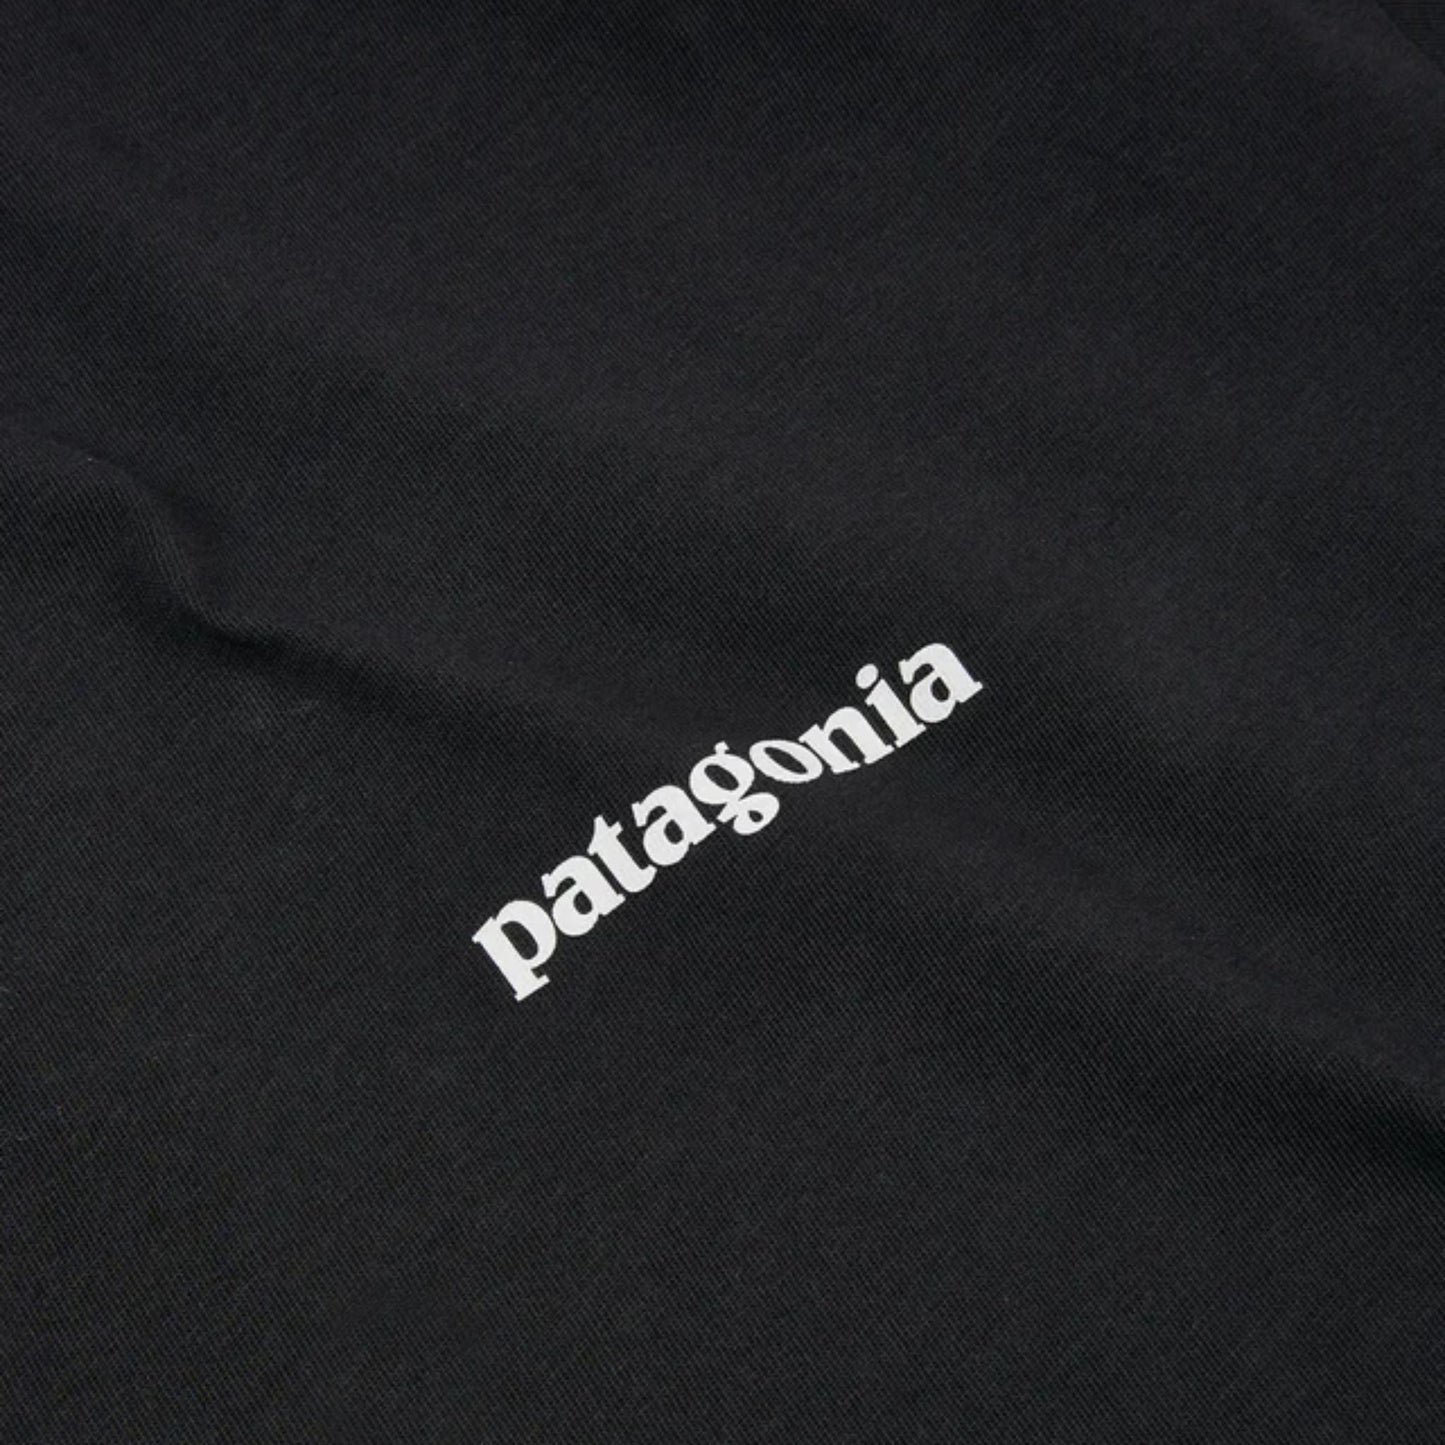 PATAGONIA - P-6 Logo Responsibili Tee